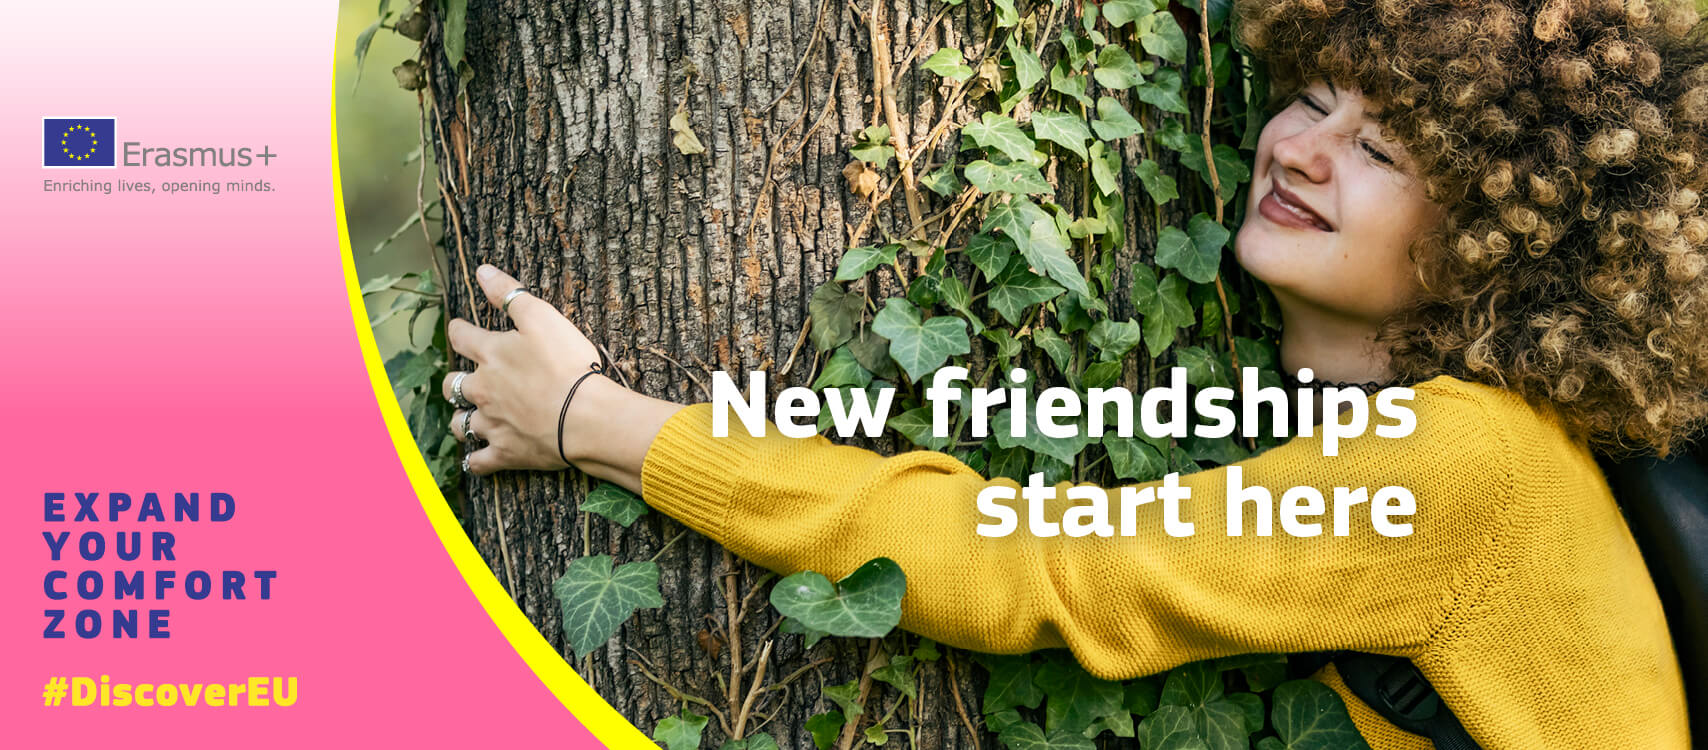 Discover EU - New friendships start here